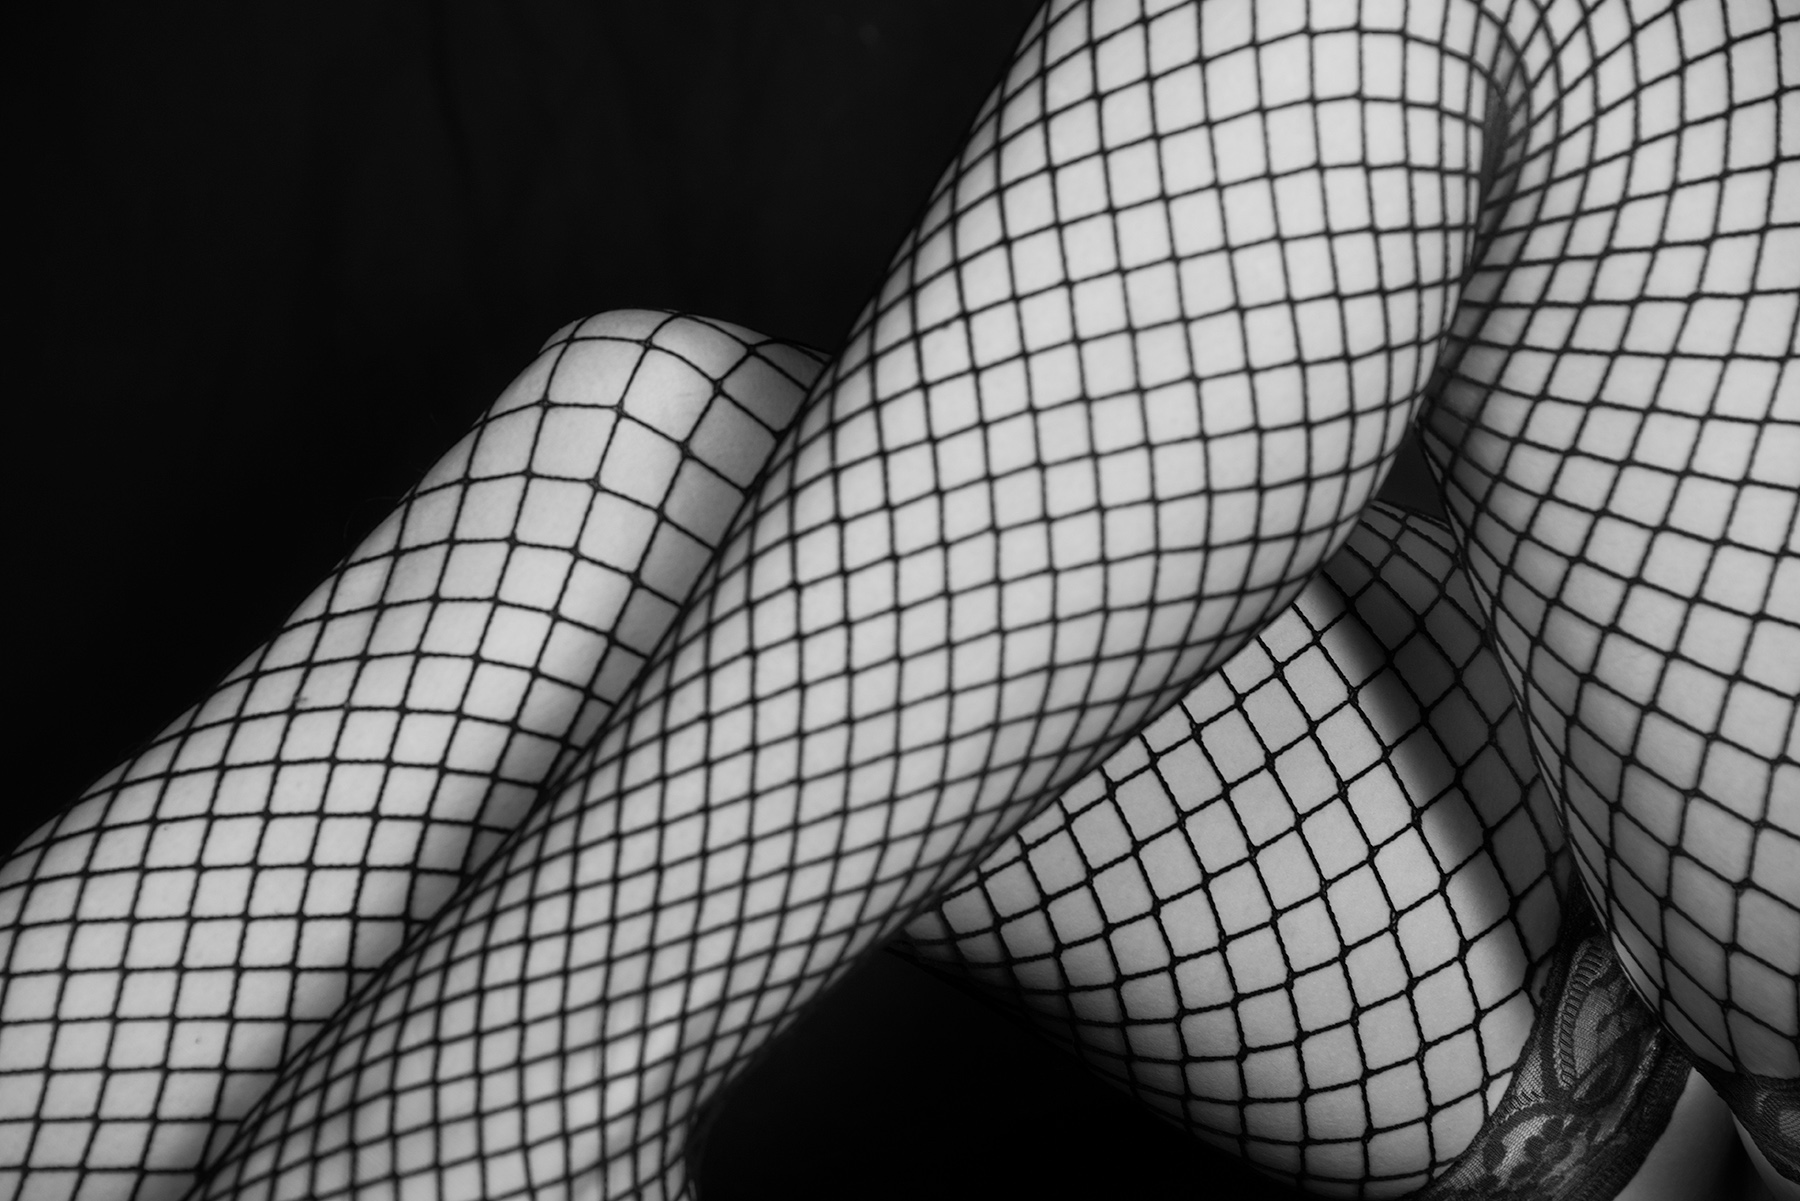 Fishnet Stockings © Harold Davis